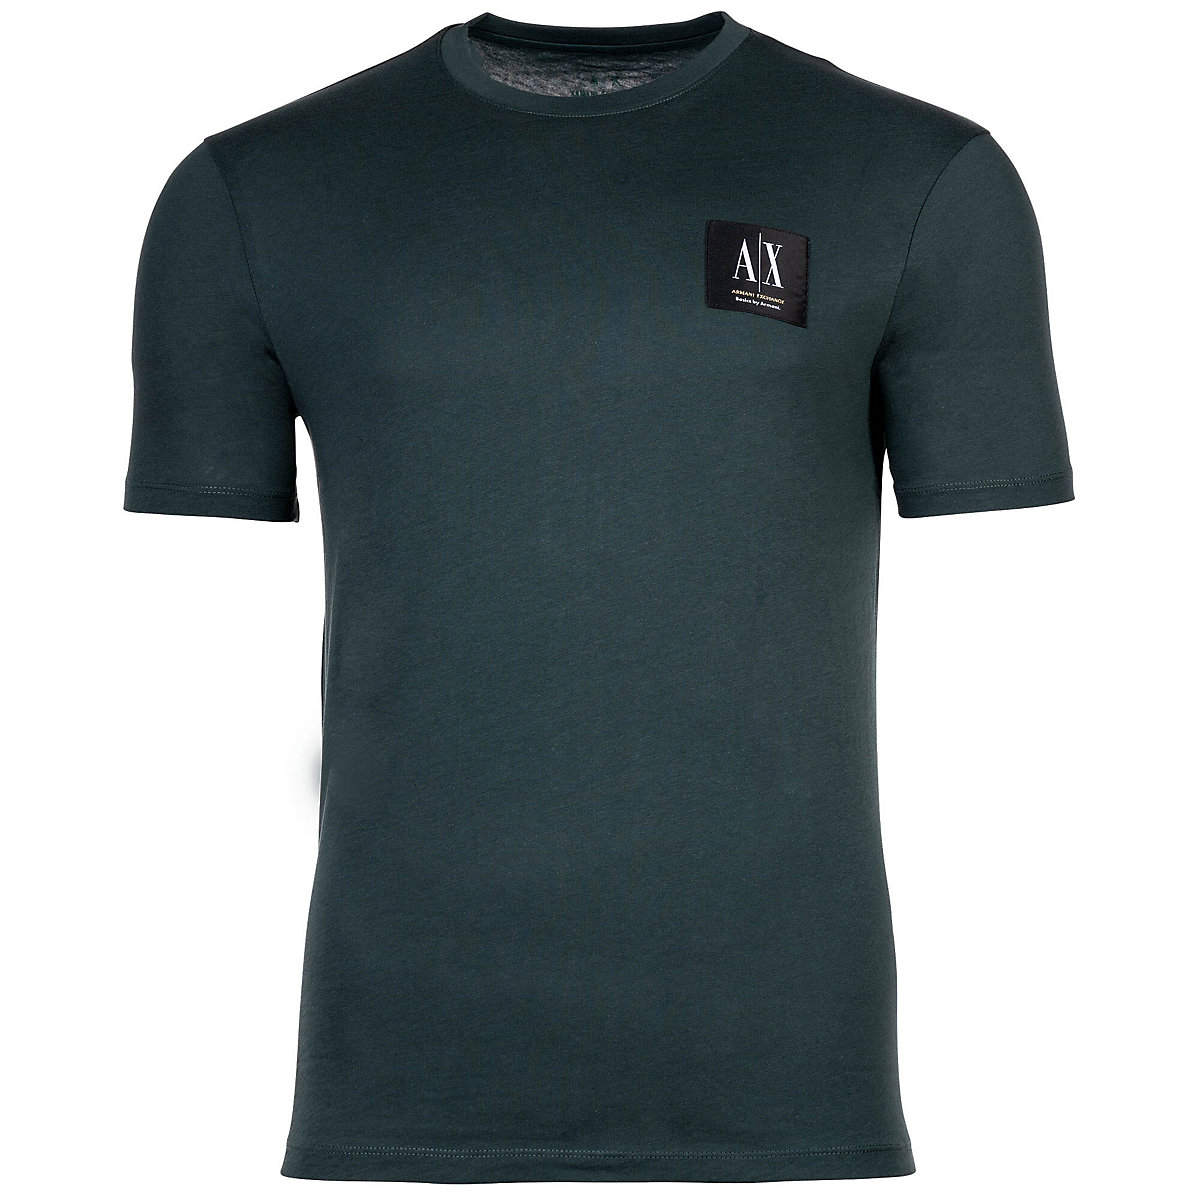 ARMANI EXCHANGE A|X Herren T-Shirt Rundhals Kurzarm Logo-Patch T-Shirts dunkelgrün